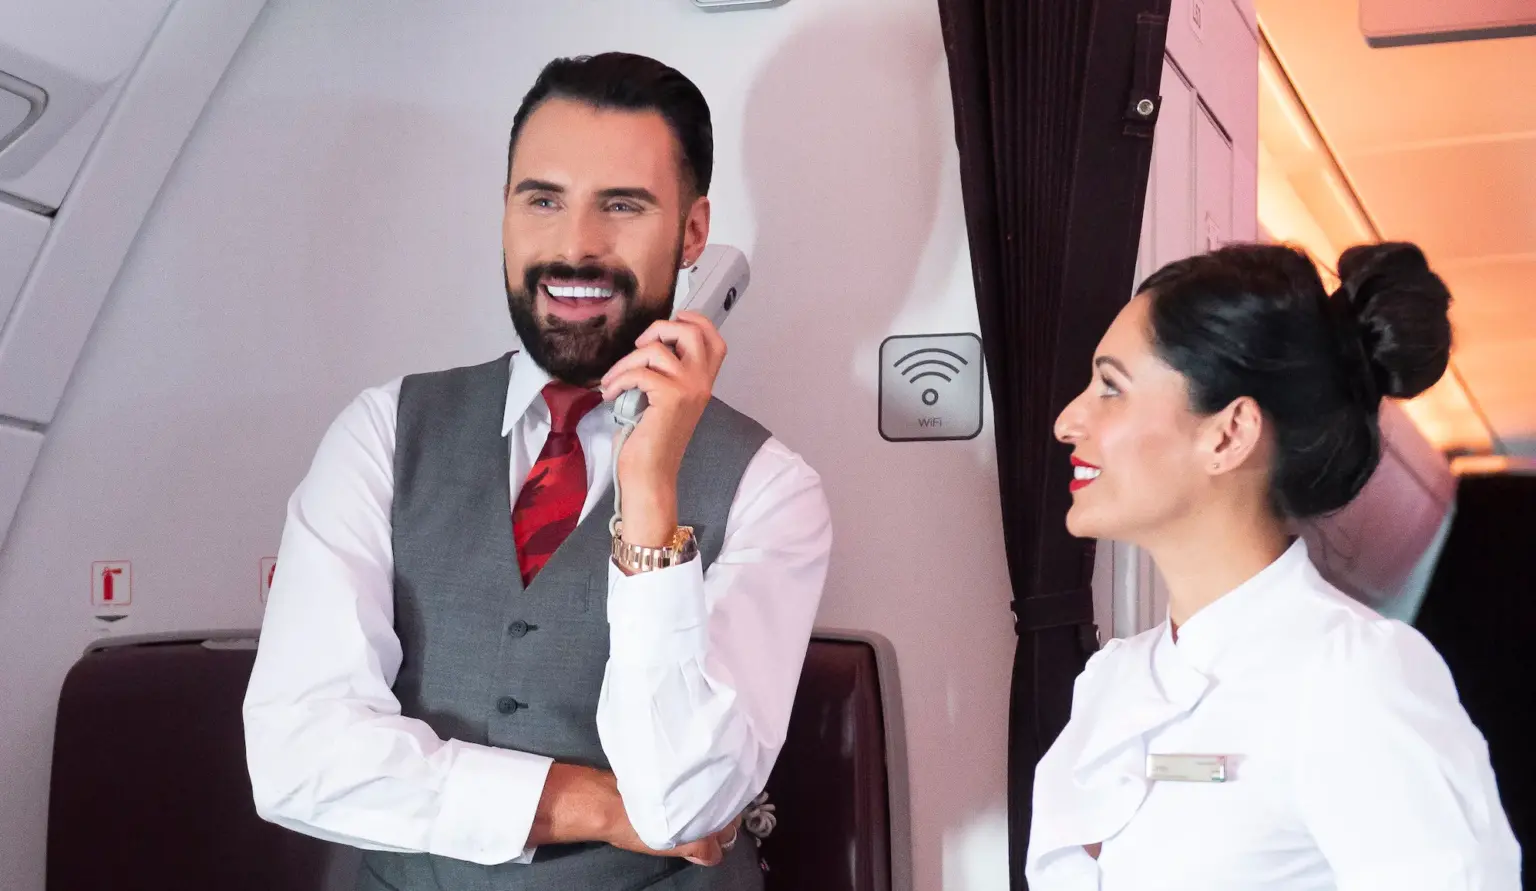 Rylan Clark fulfils childhood dream of working as cabin crew on Virgin Atlantic flight